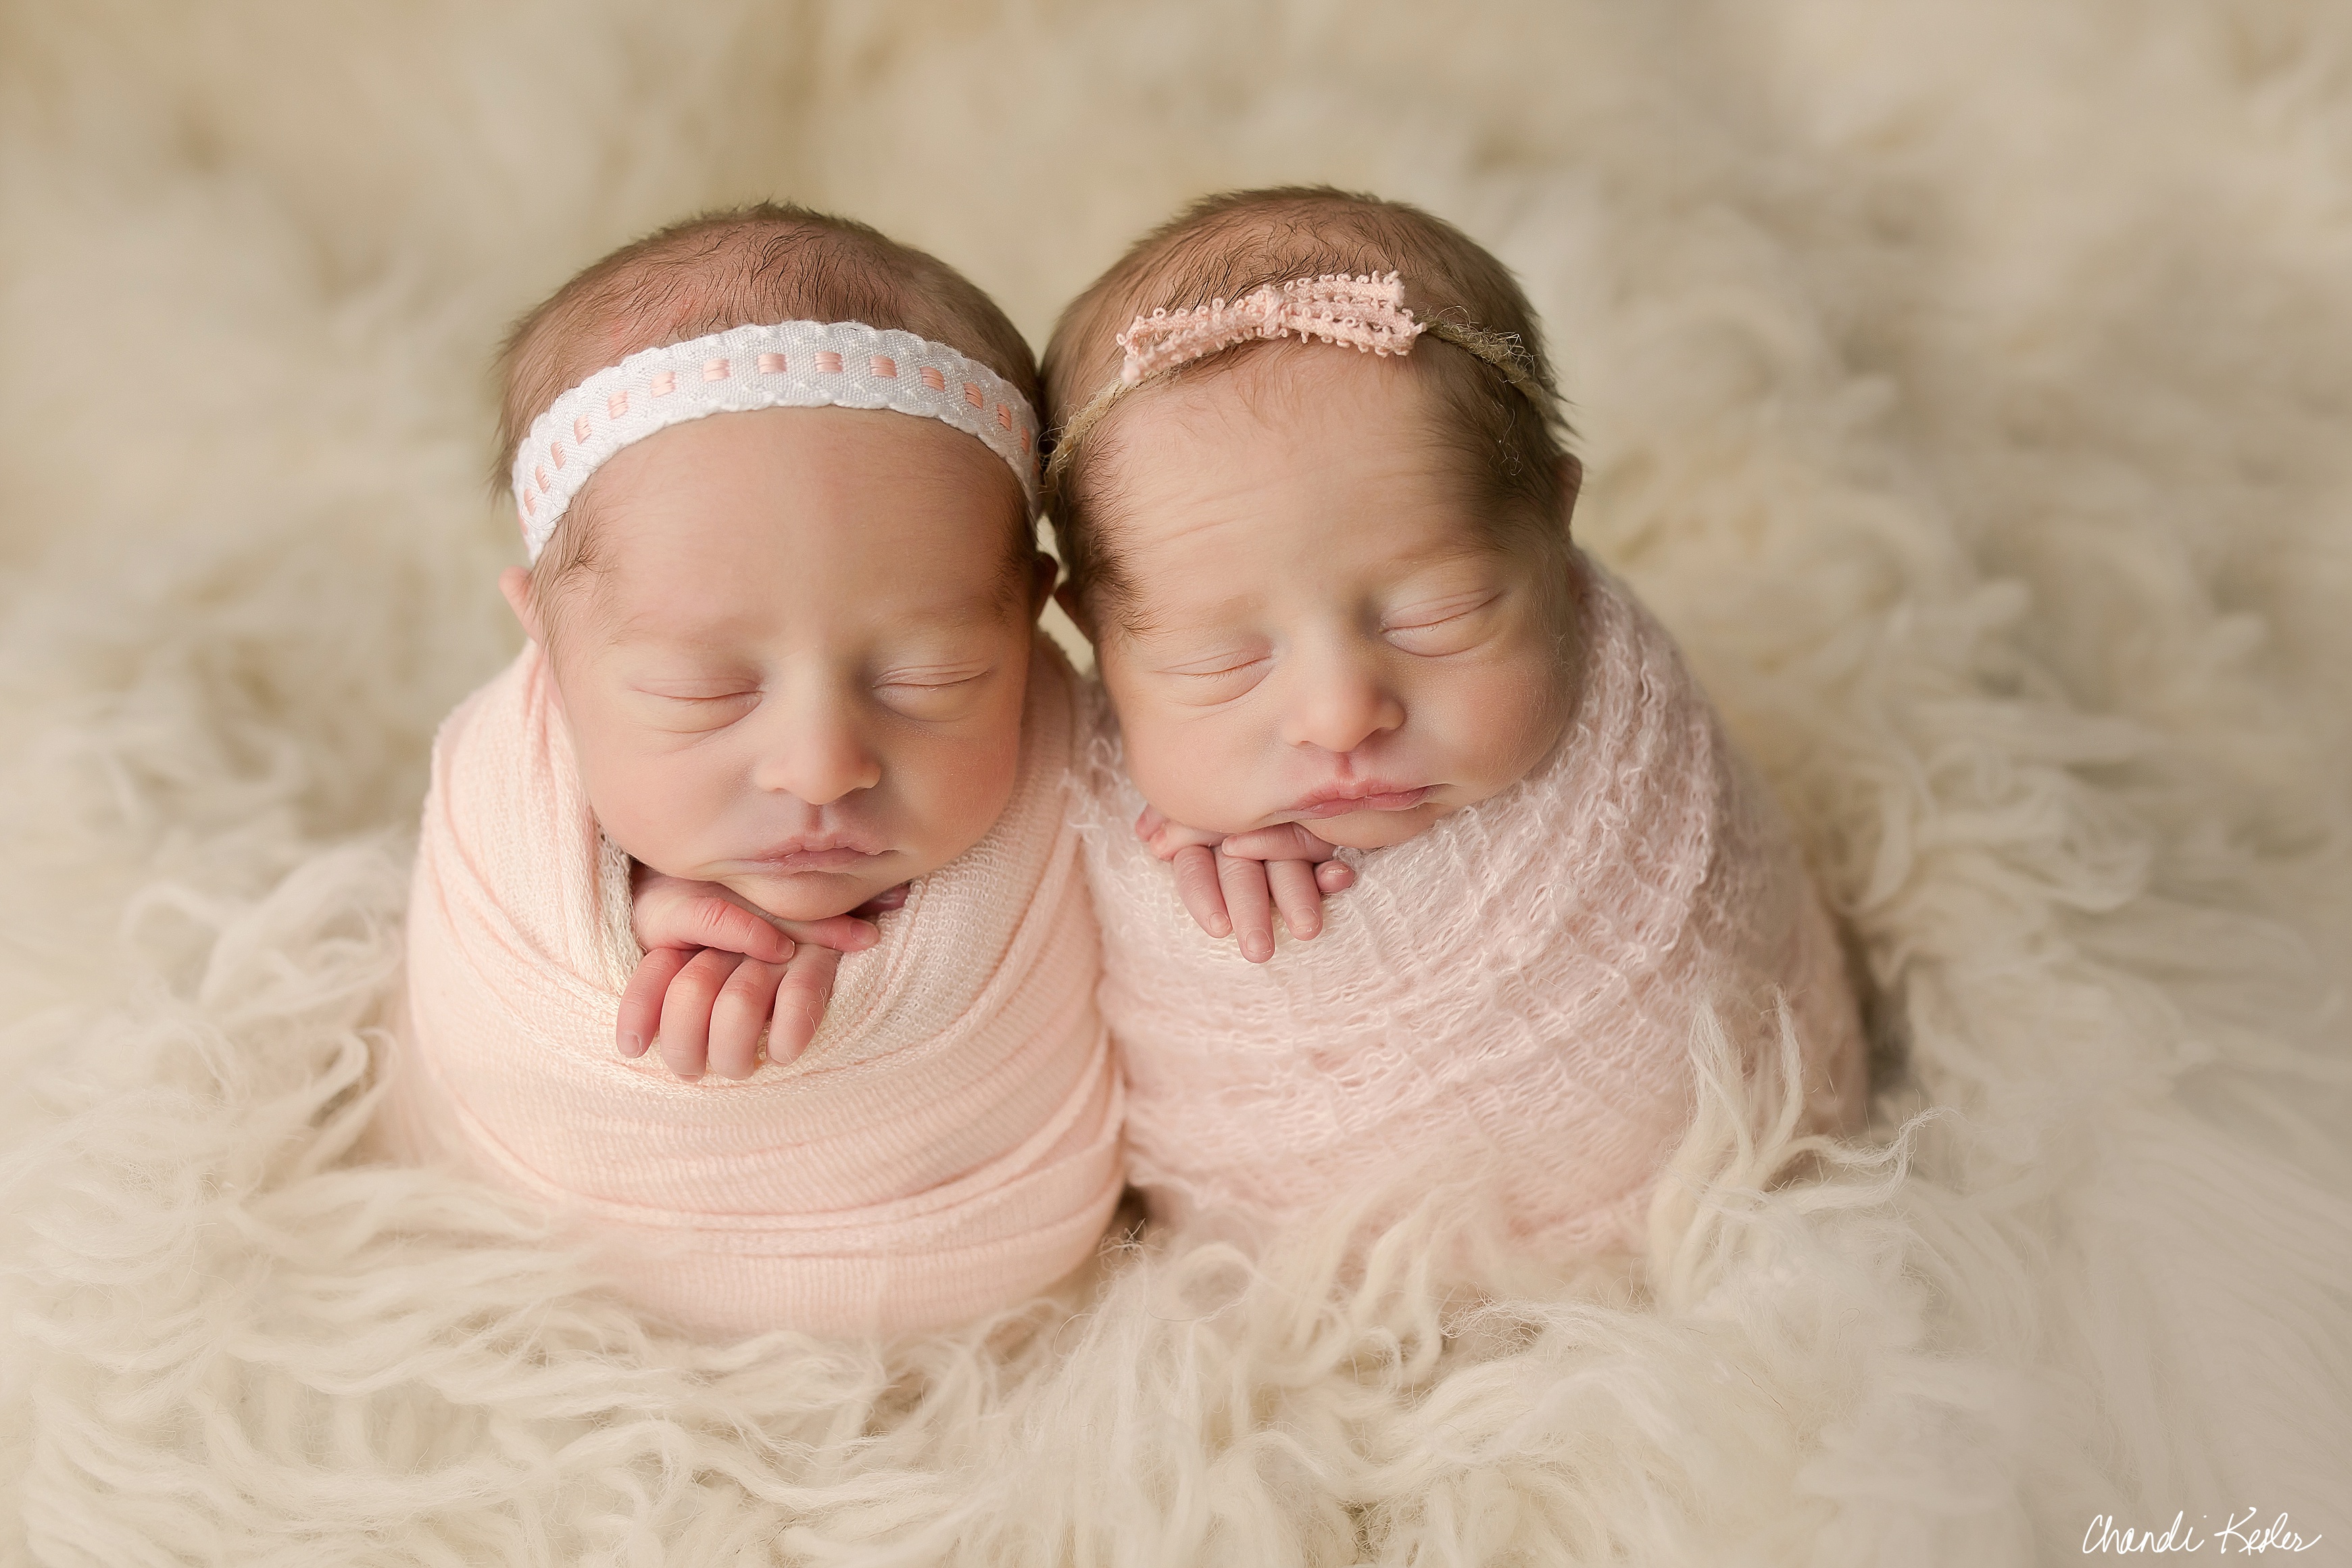 Charleston IL Newborn Photographer | Chandi Kesler Photography | Newborn Twin Picture Ideas